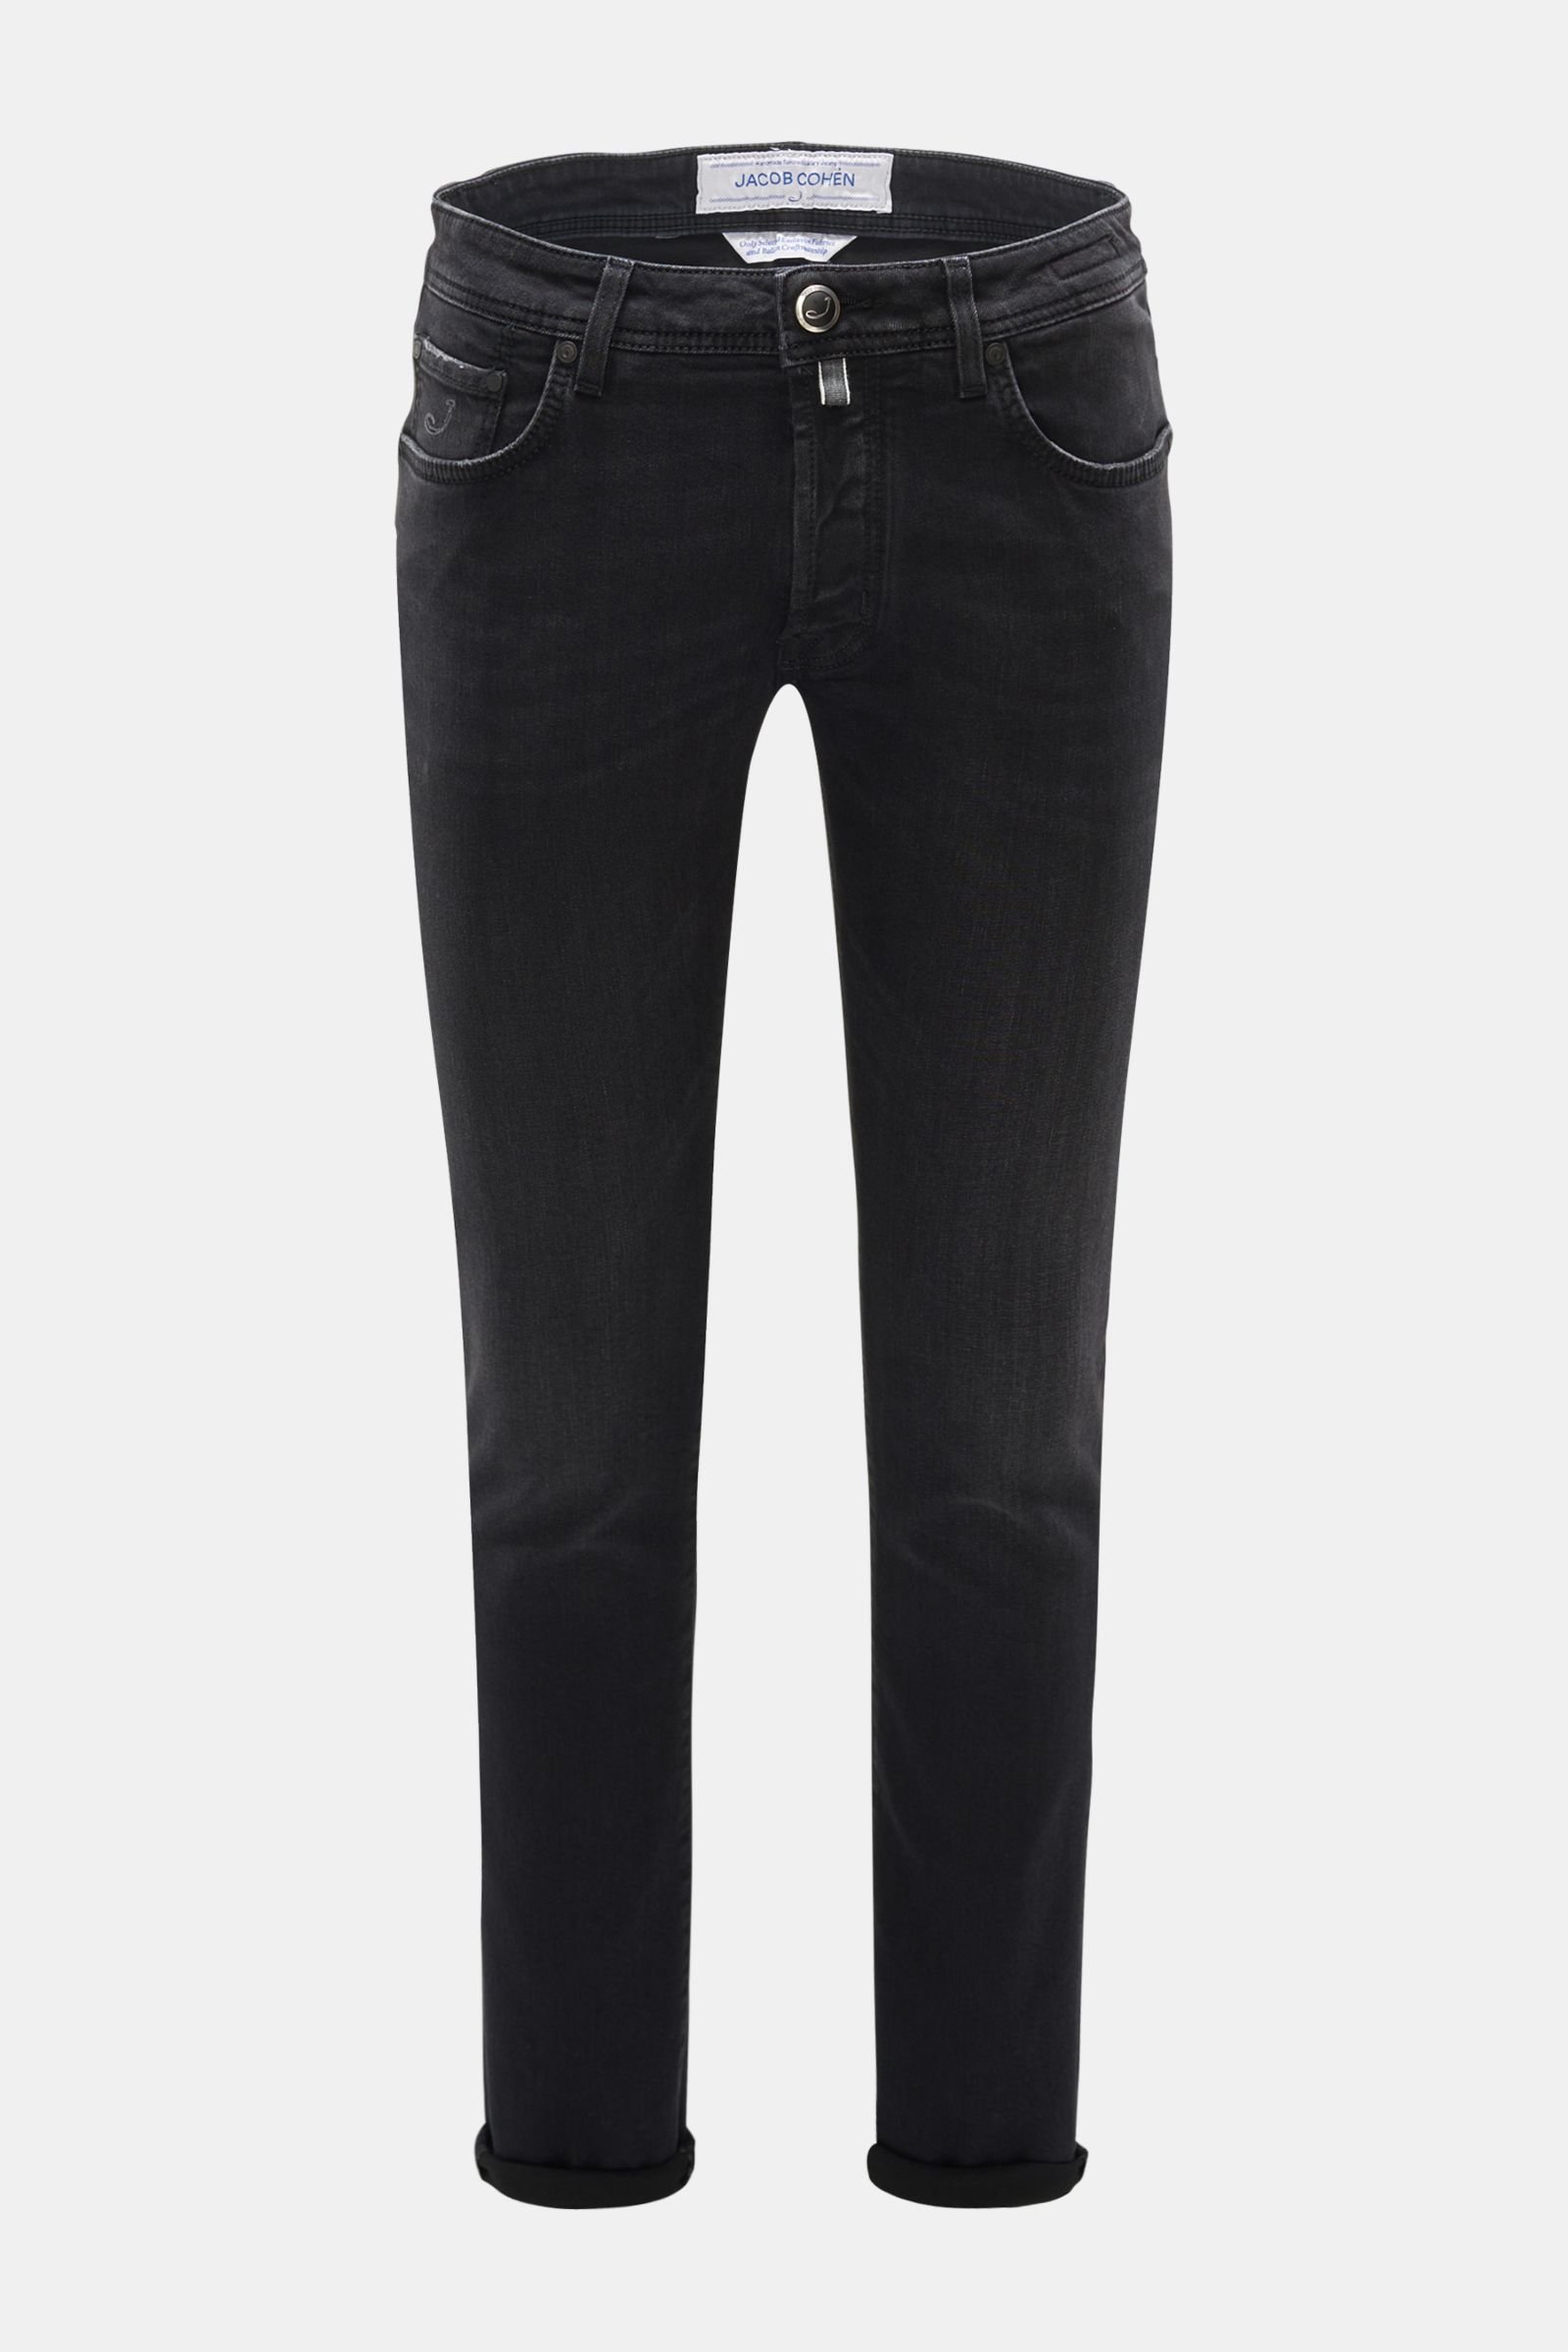 Jeans 'J688 Comfort Slim Fit' black